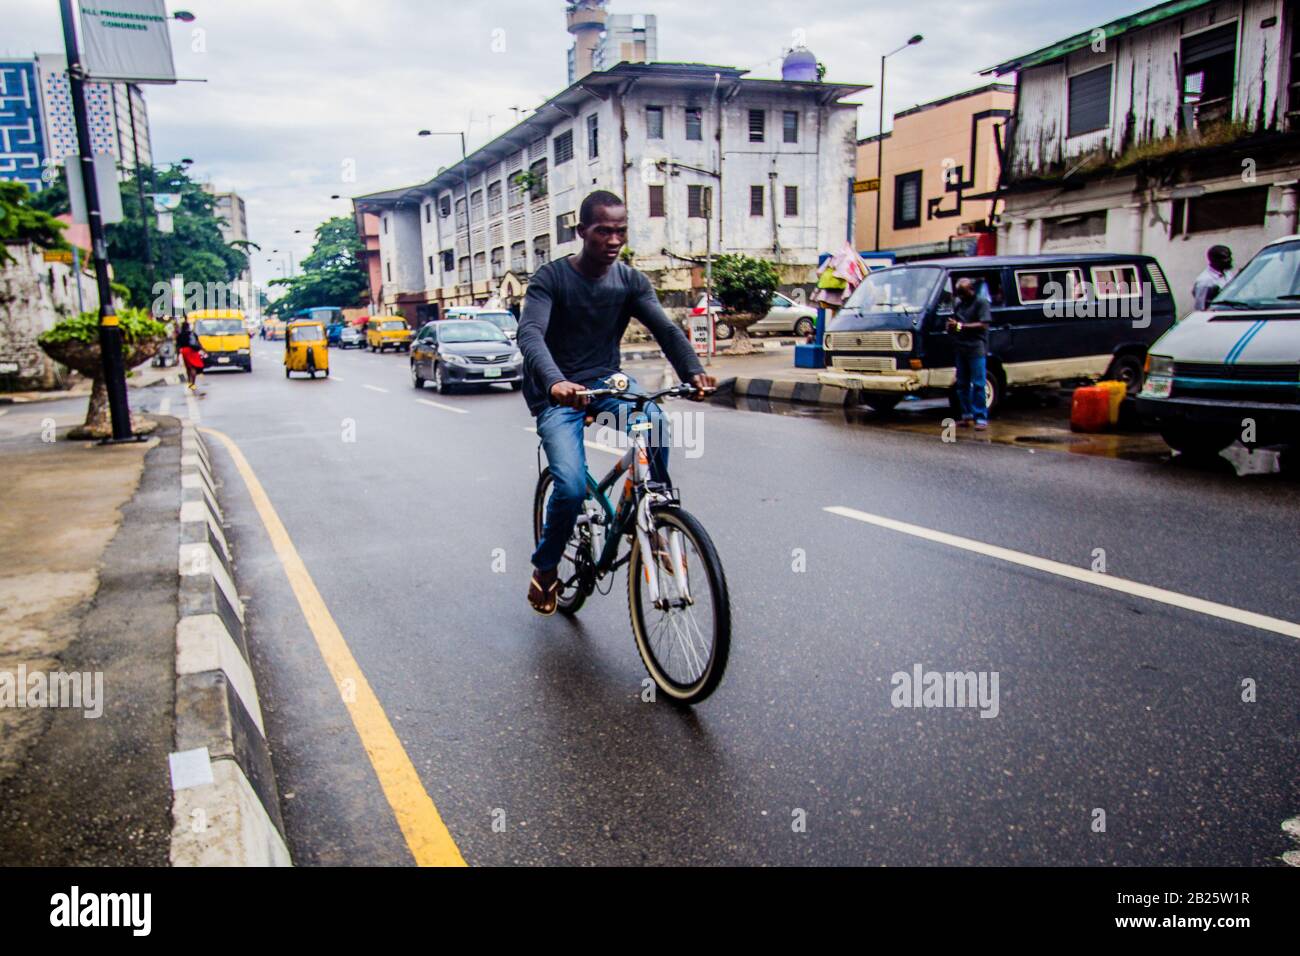 a man riding a bike on a street in Lagos, Nigeria. Stock Photo